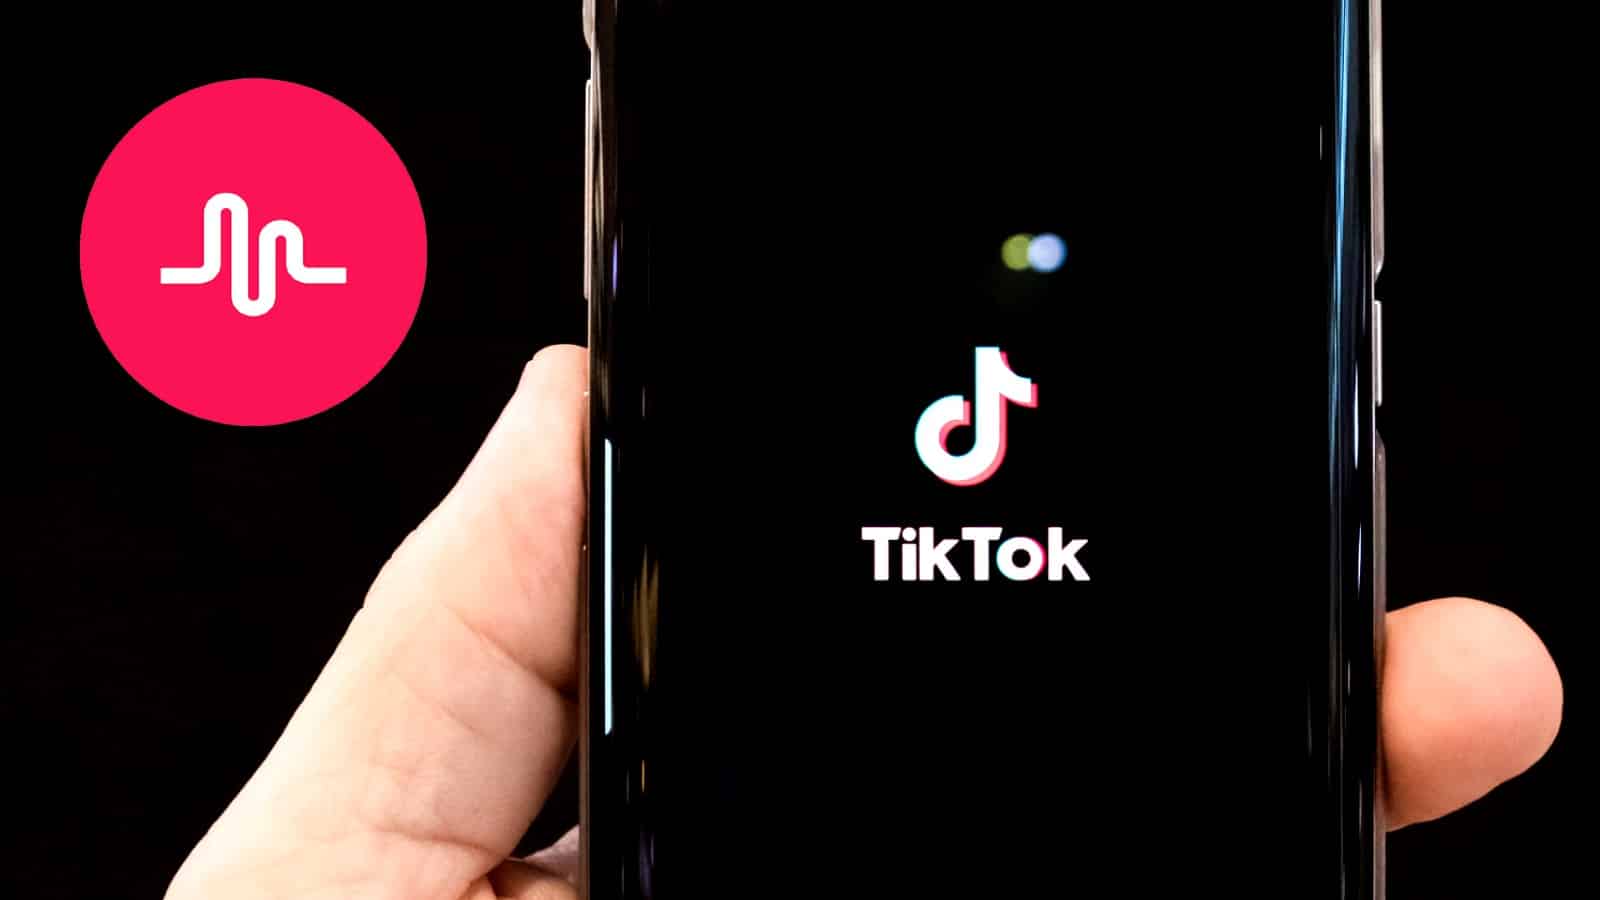 TikTok logo on a phone next to the Musical.ly logo